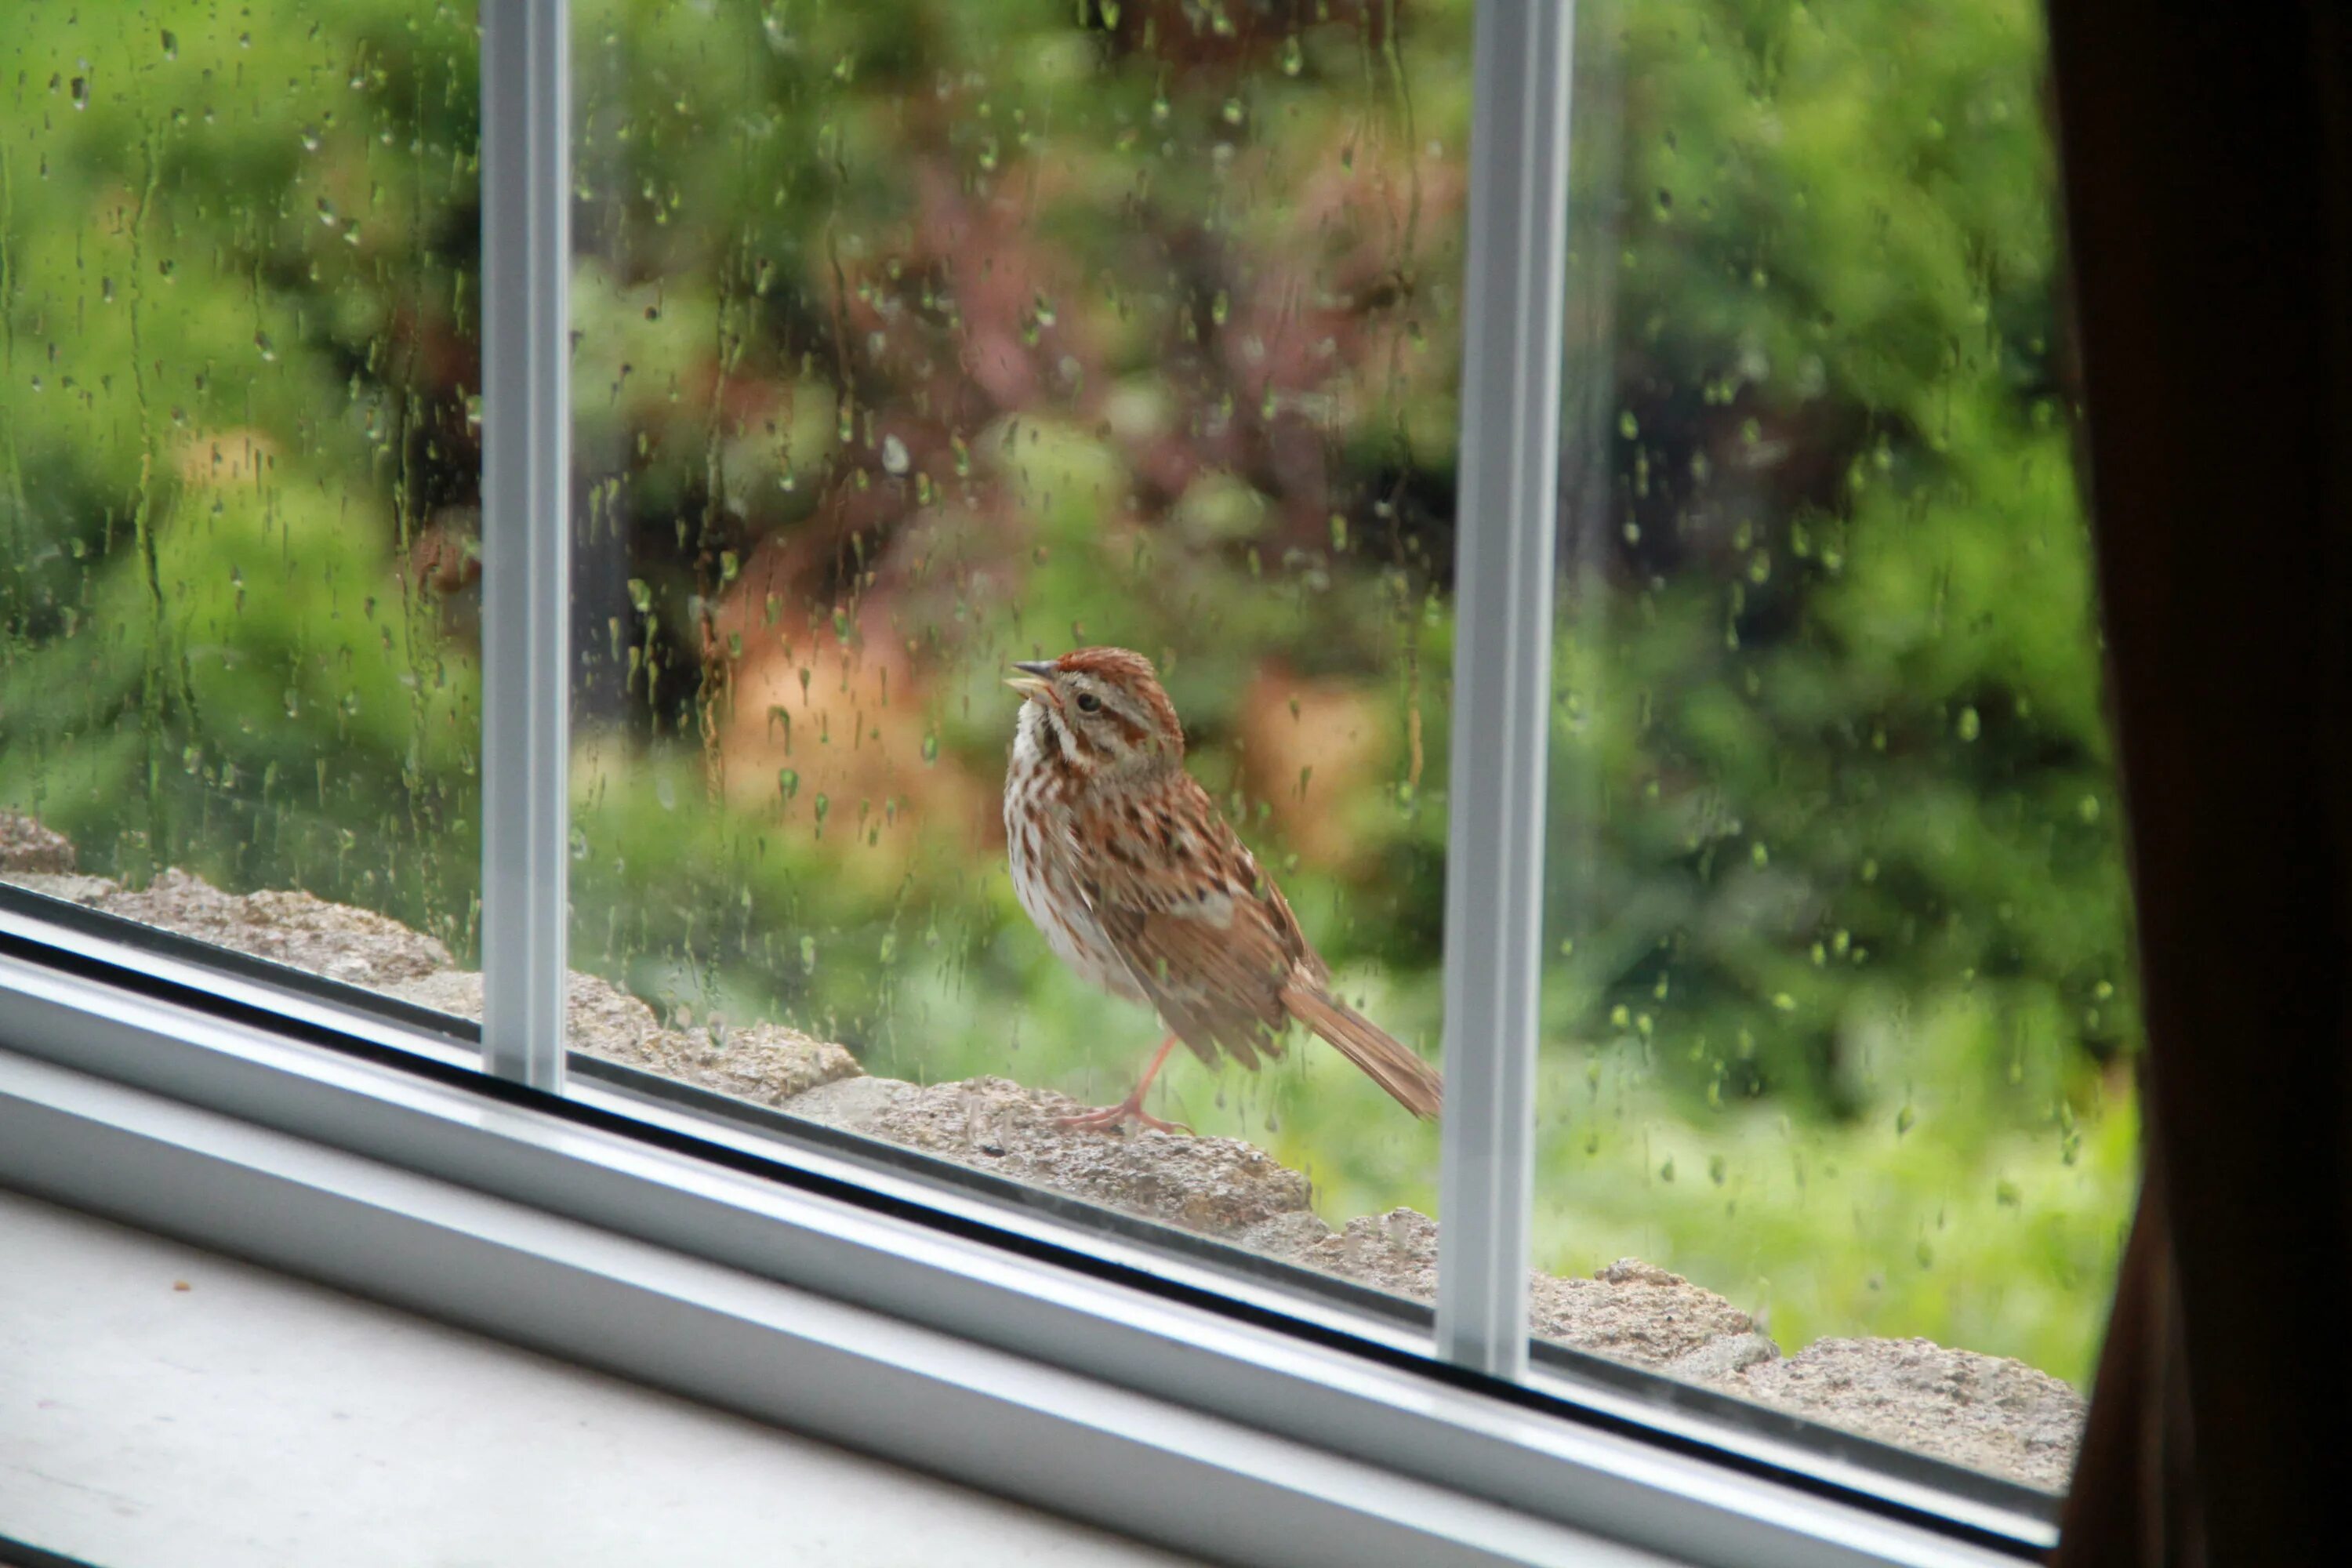 Сегодня у окошка чирикнул воробей песня. Воробей на подоконнике. Птички за окном. Птичка на подоконнике. Воробьи у окна.